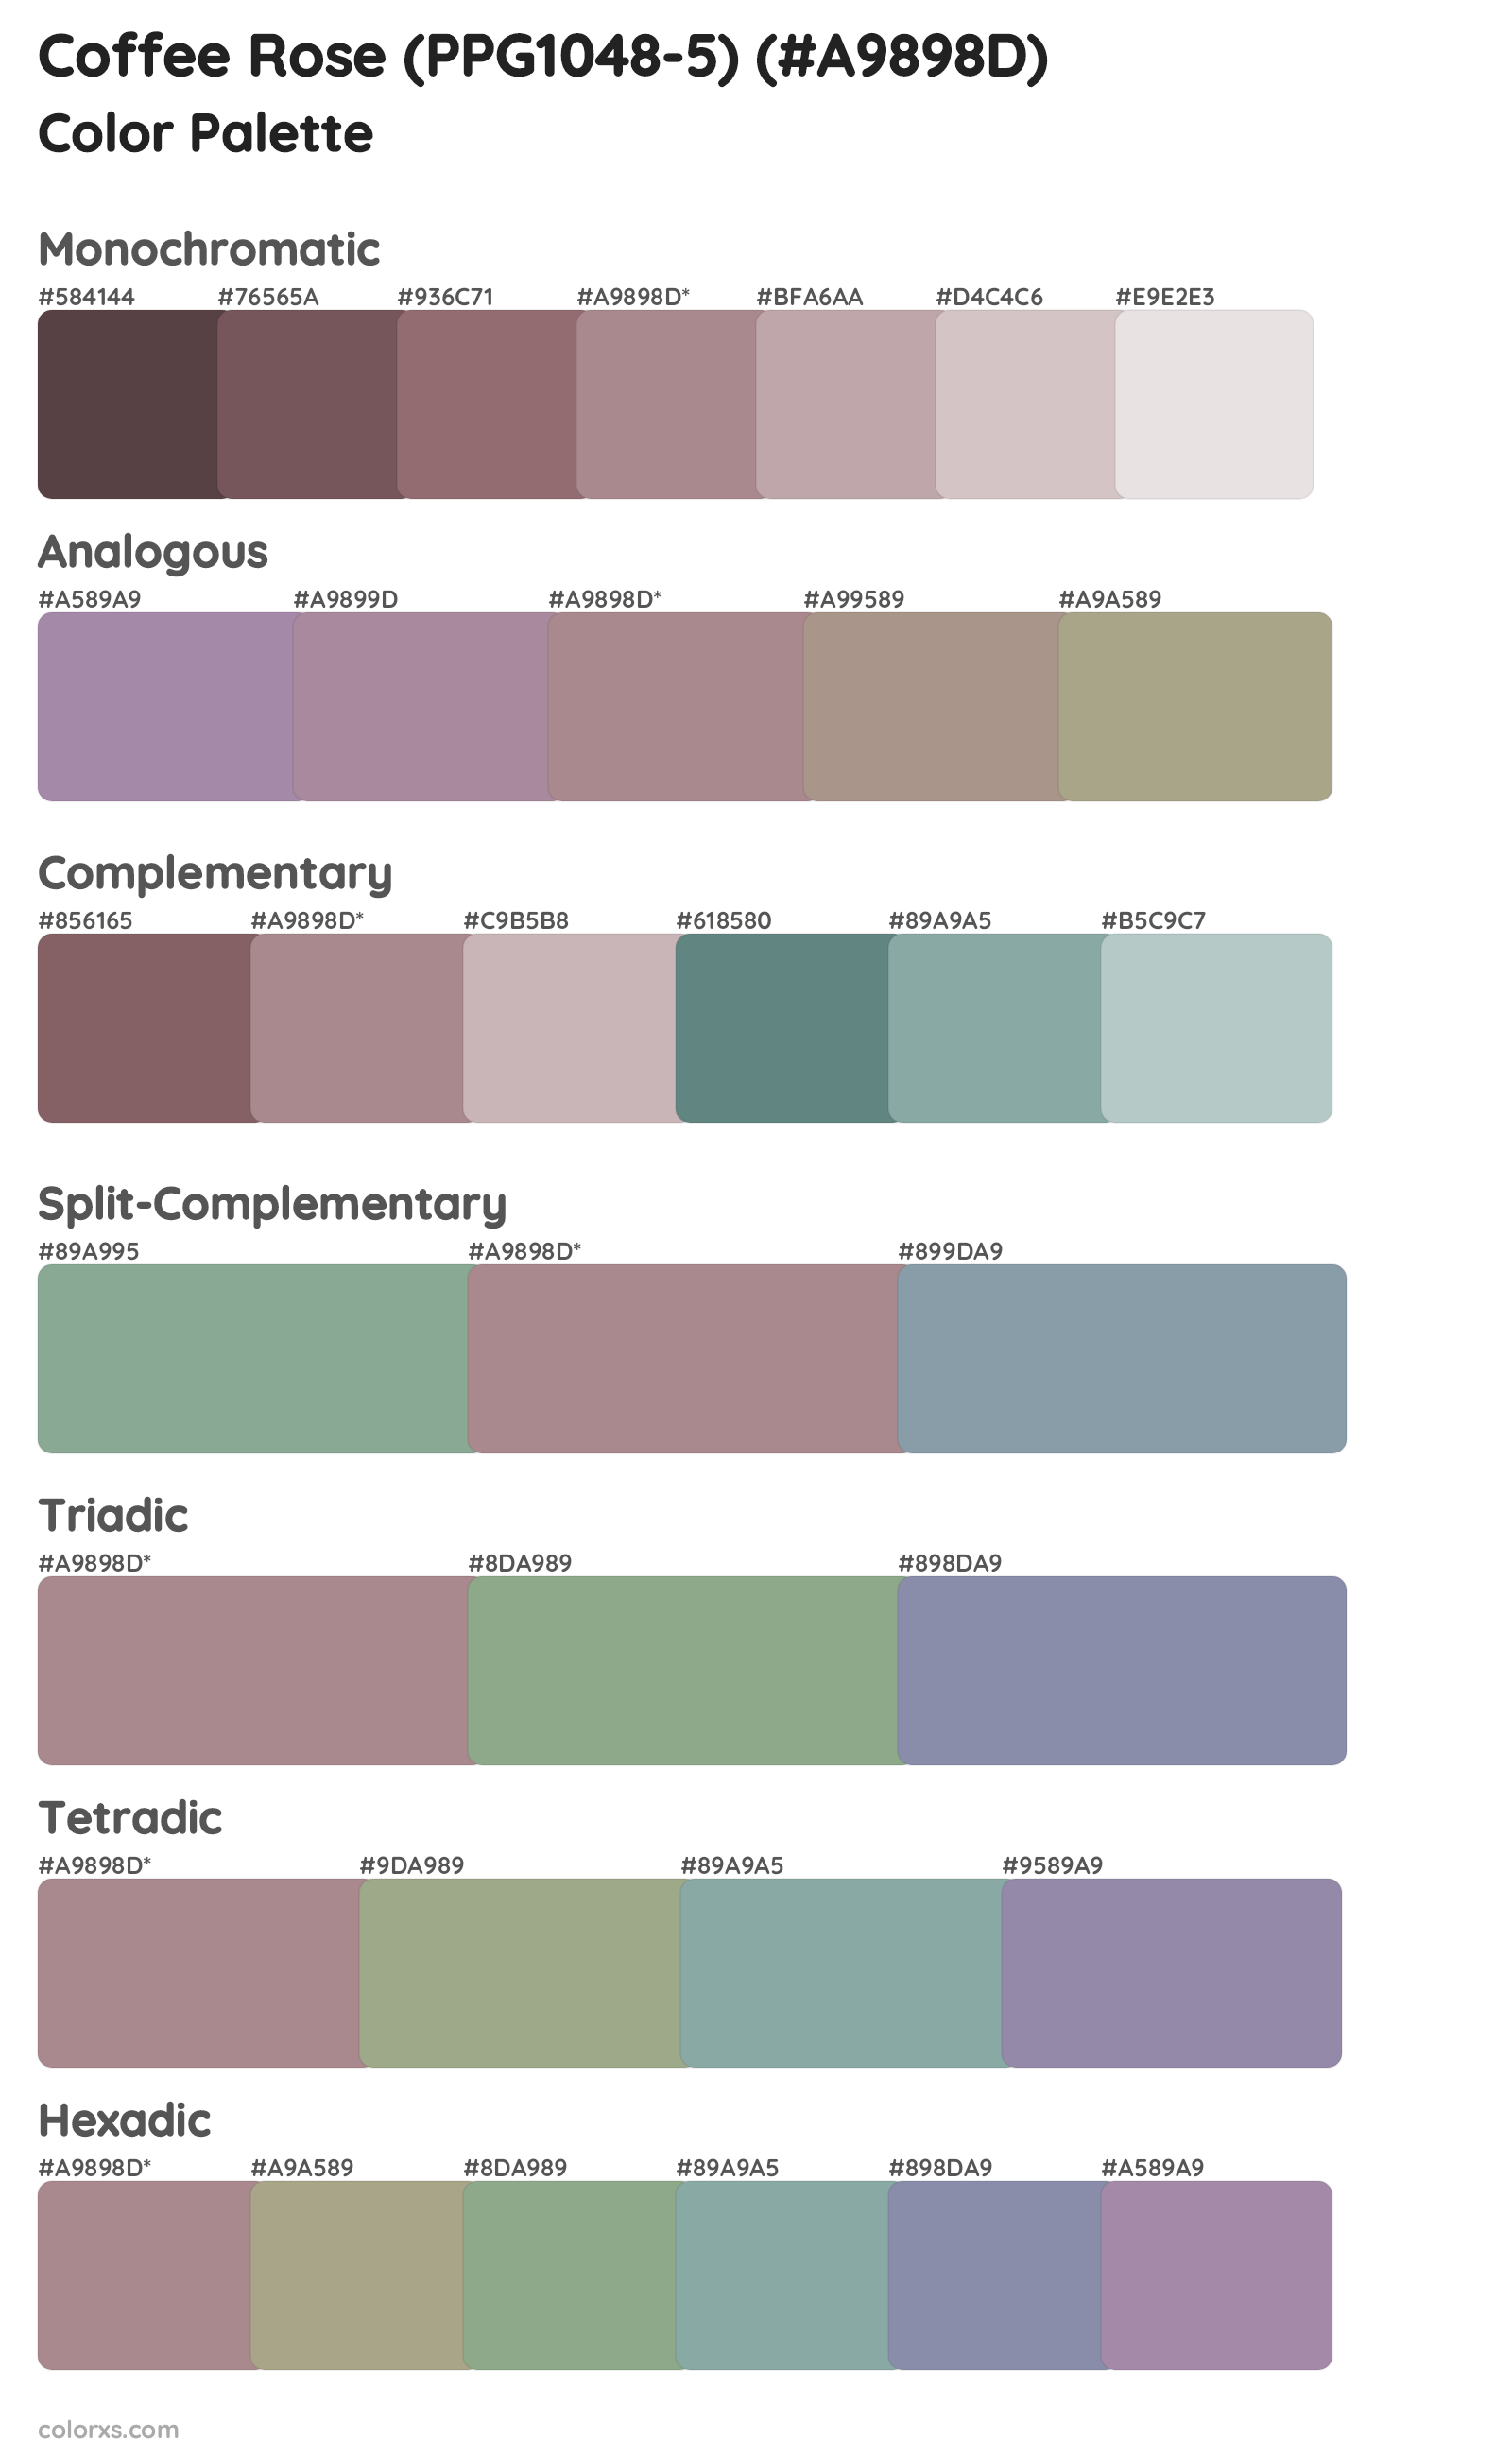 Coffee Rose (PPG1048-5) Color Scheme Palettes